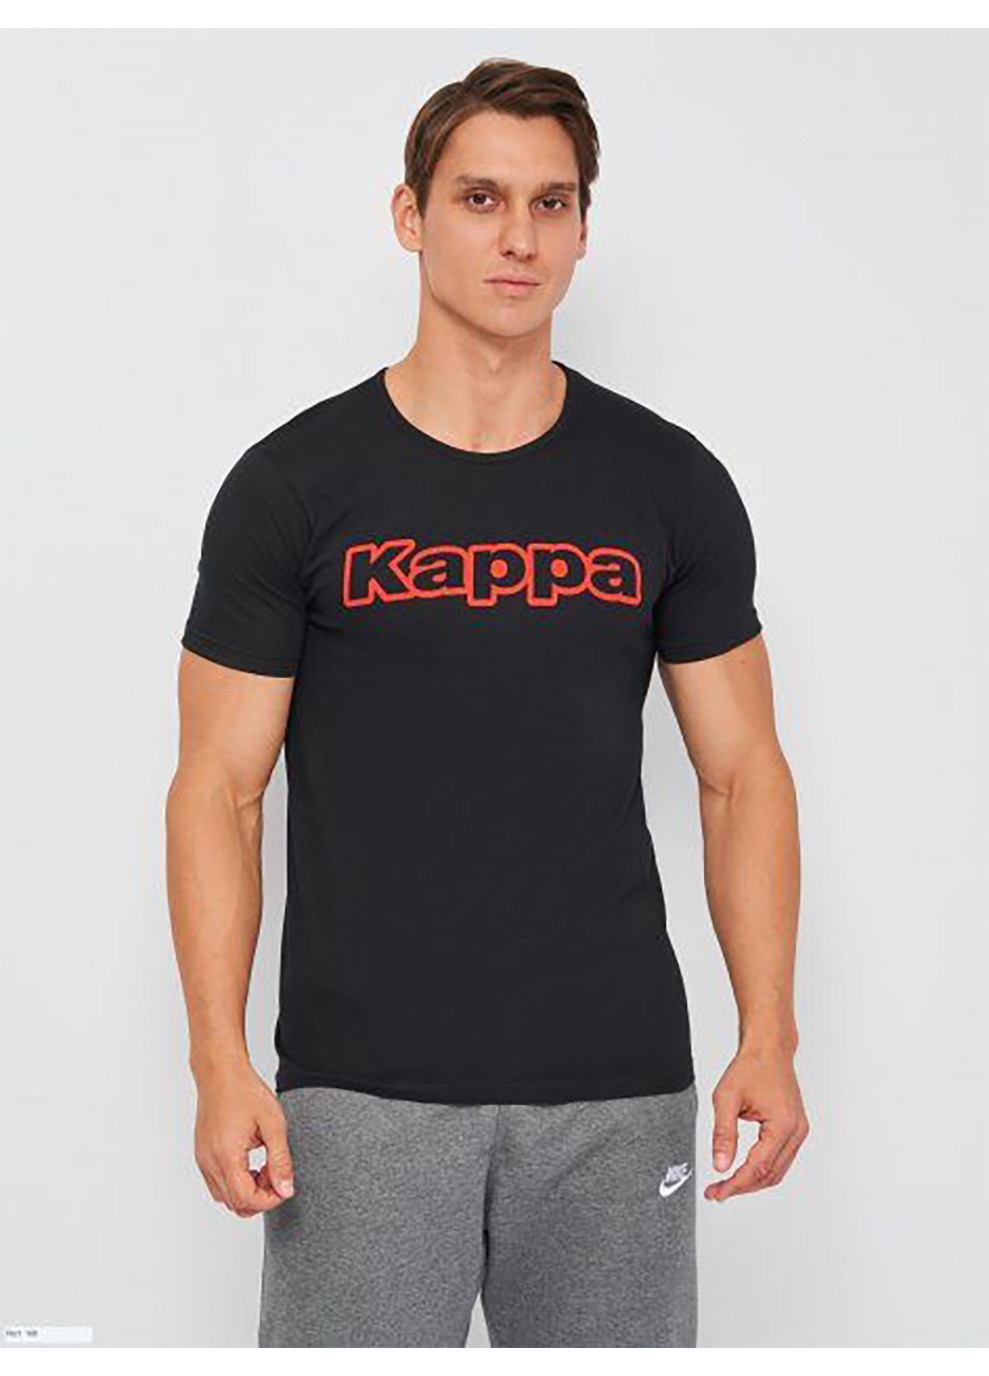 Чорна футболка t-shirt mezza manica girocollo stampa logo petto чорний m чоловік k1335 nero-m Kappa